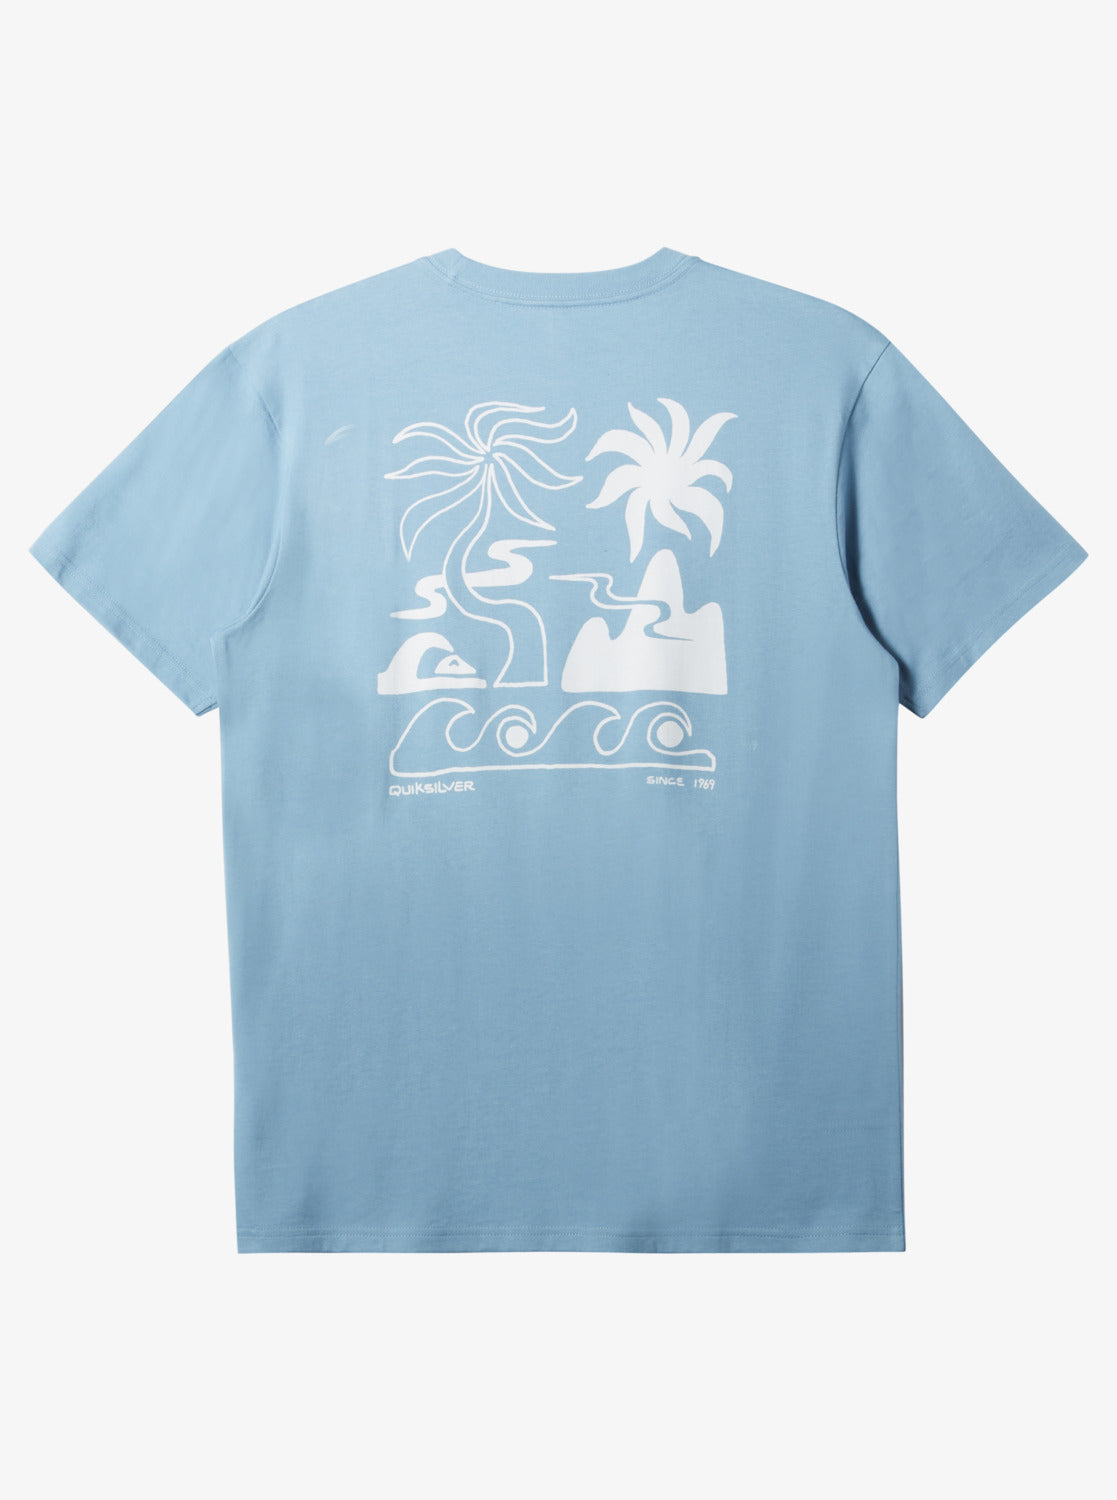 Quiksilver Tropical Breeze T-Shirt in Blue Shadow